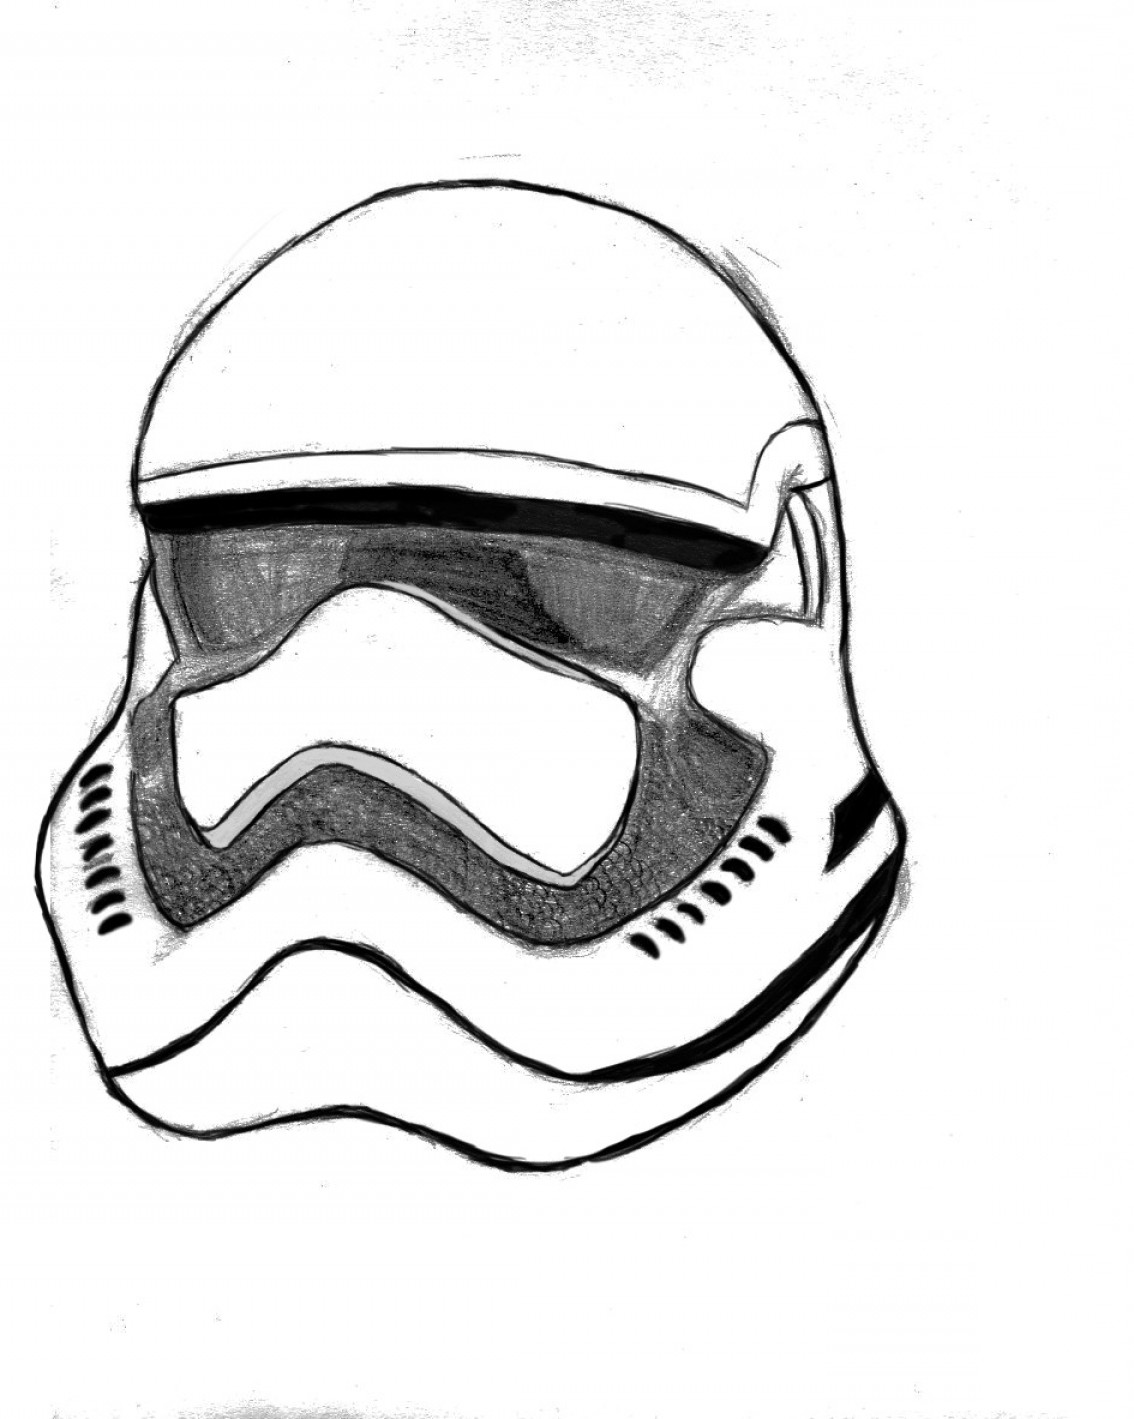 Stormtrooper Helmet Sketch at Explore collection